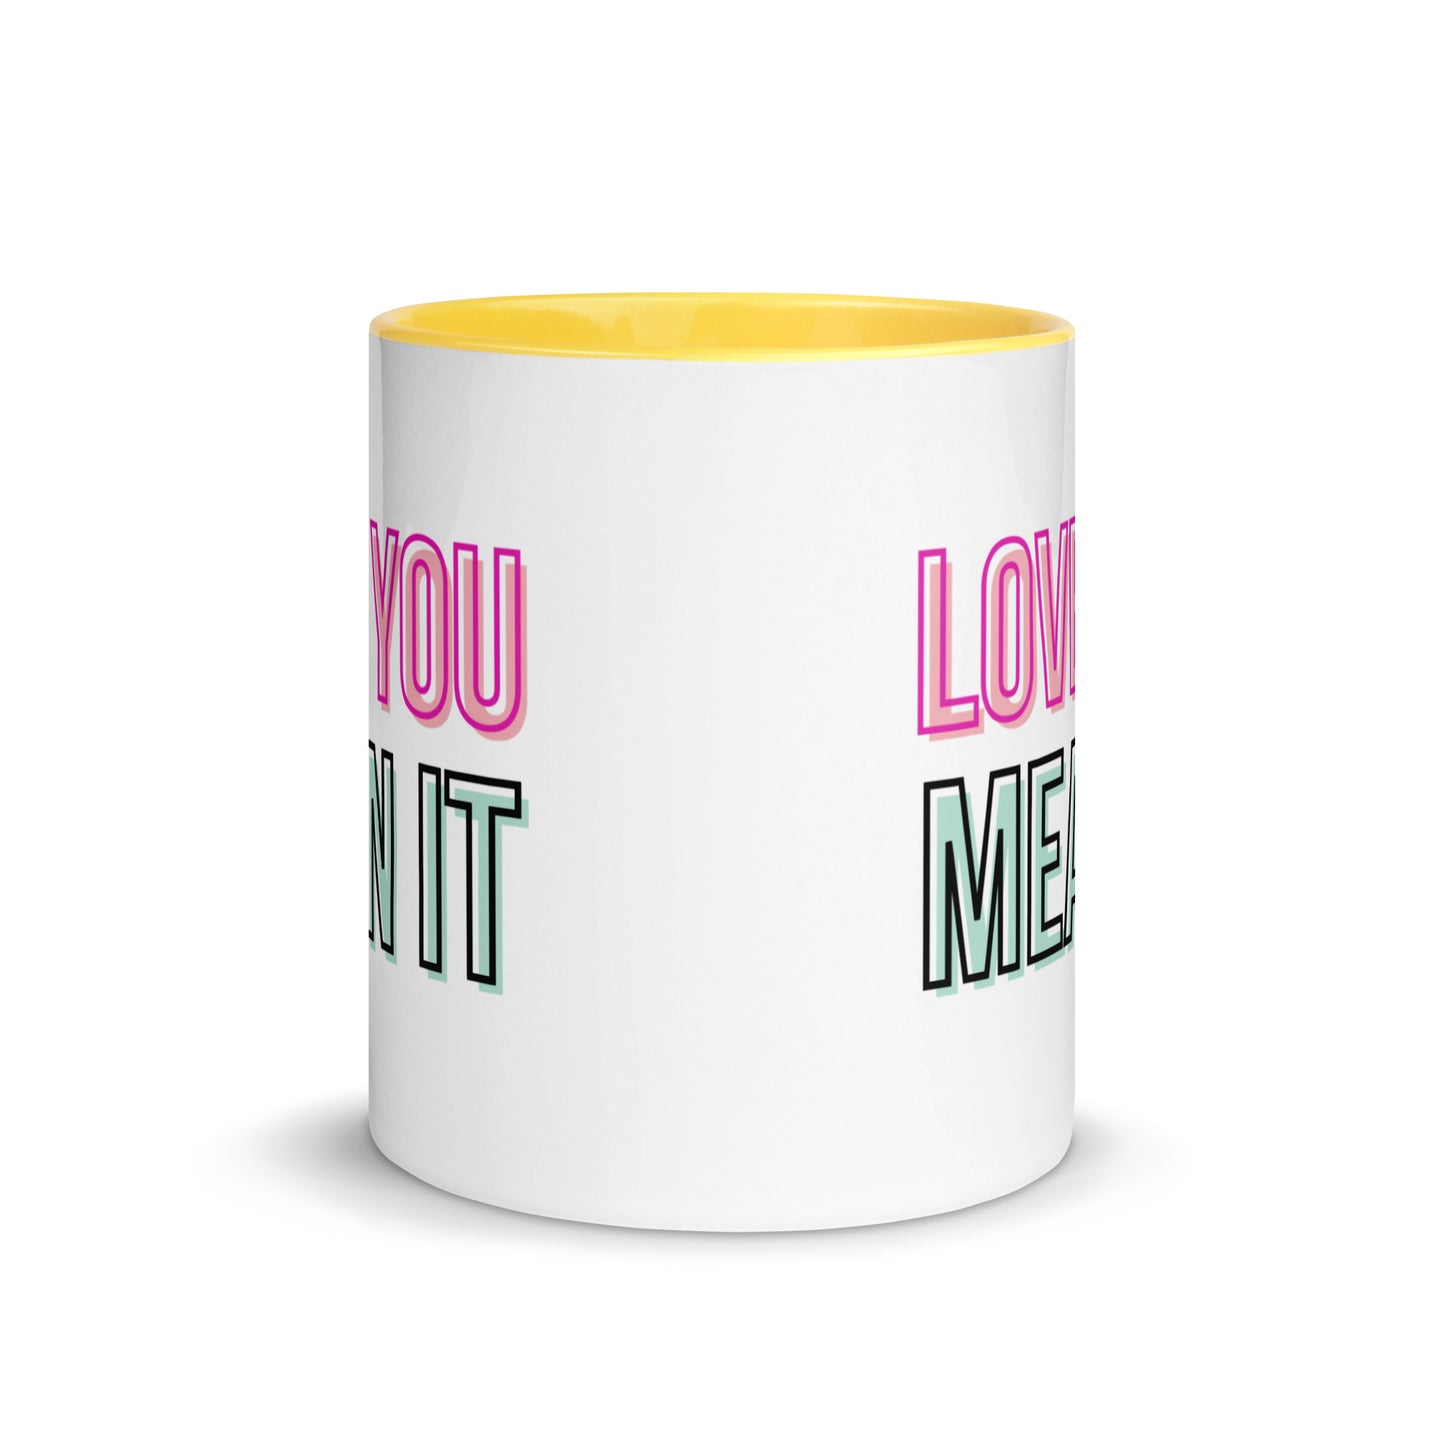 Love You, Mean It Mug